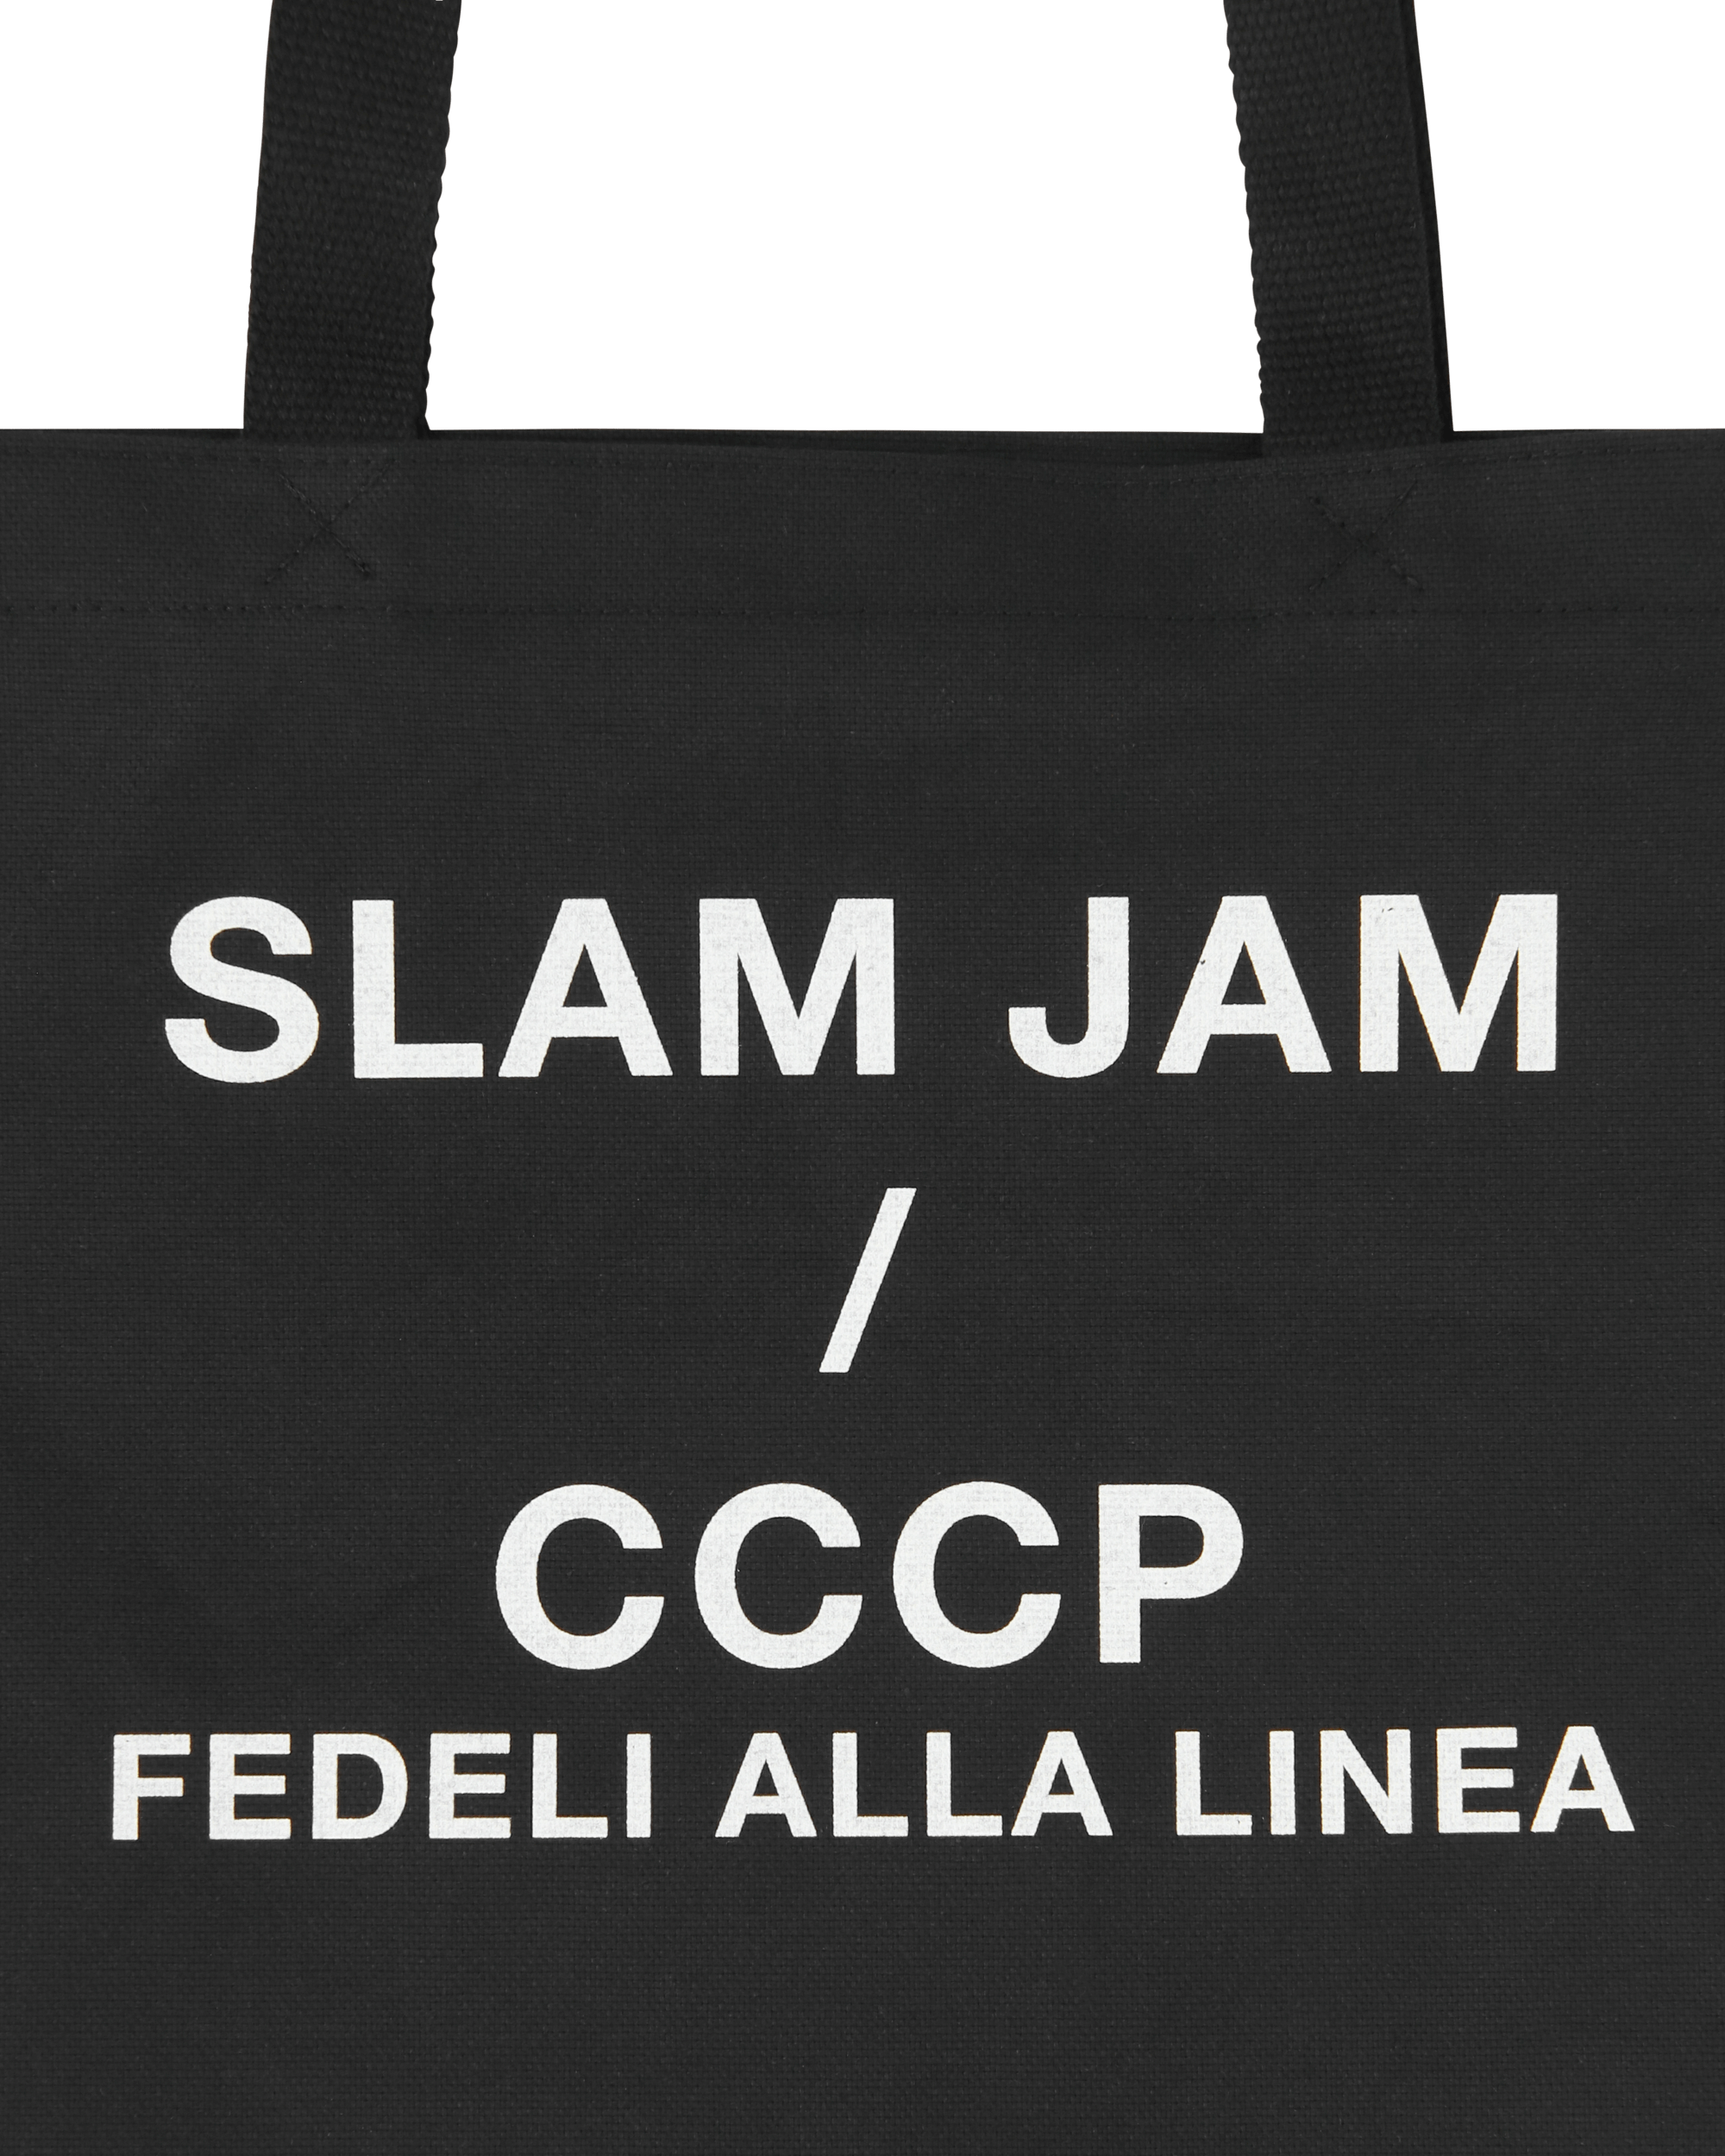 Slam Jam CCCP FEDELI ALLA LINEA - TOTE BAG BLACK Bags and Backpacks Tote SJAUBG01OT02 BLK001